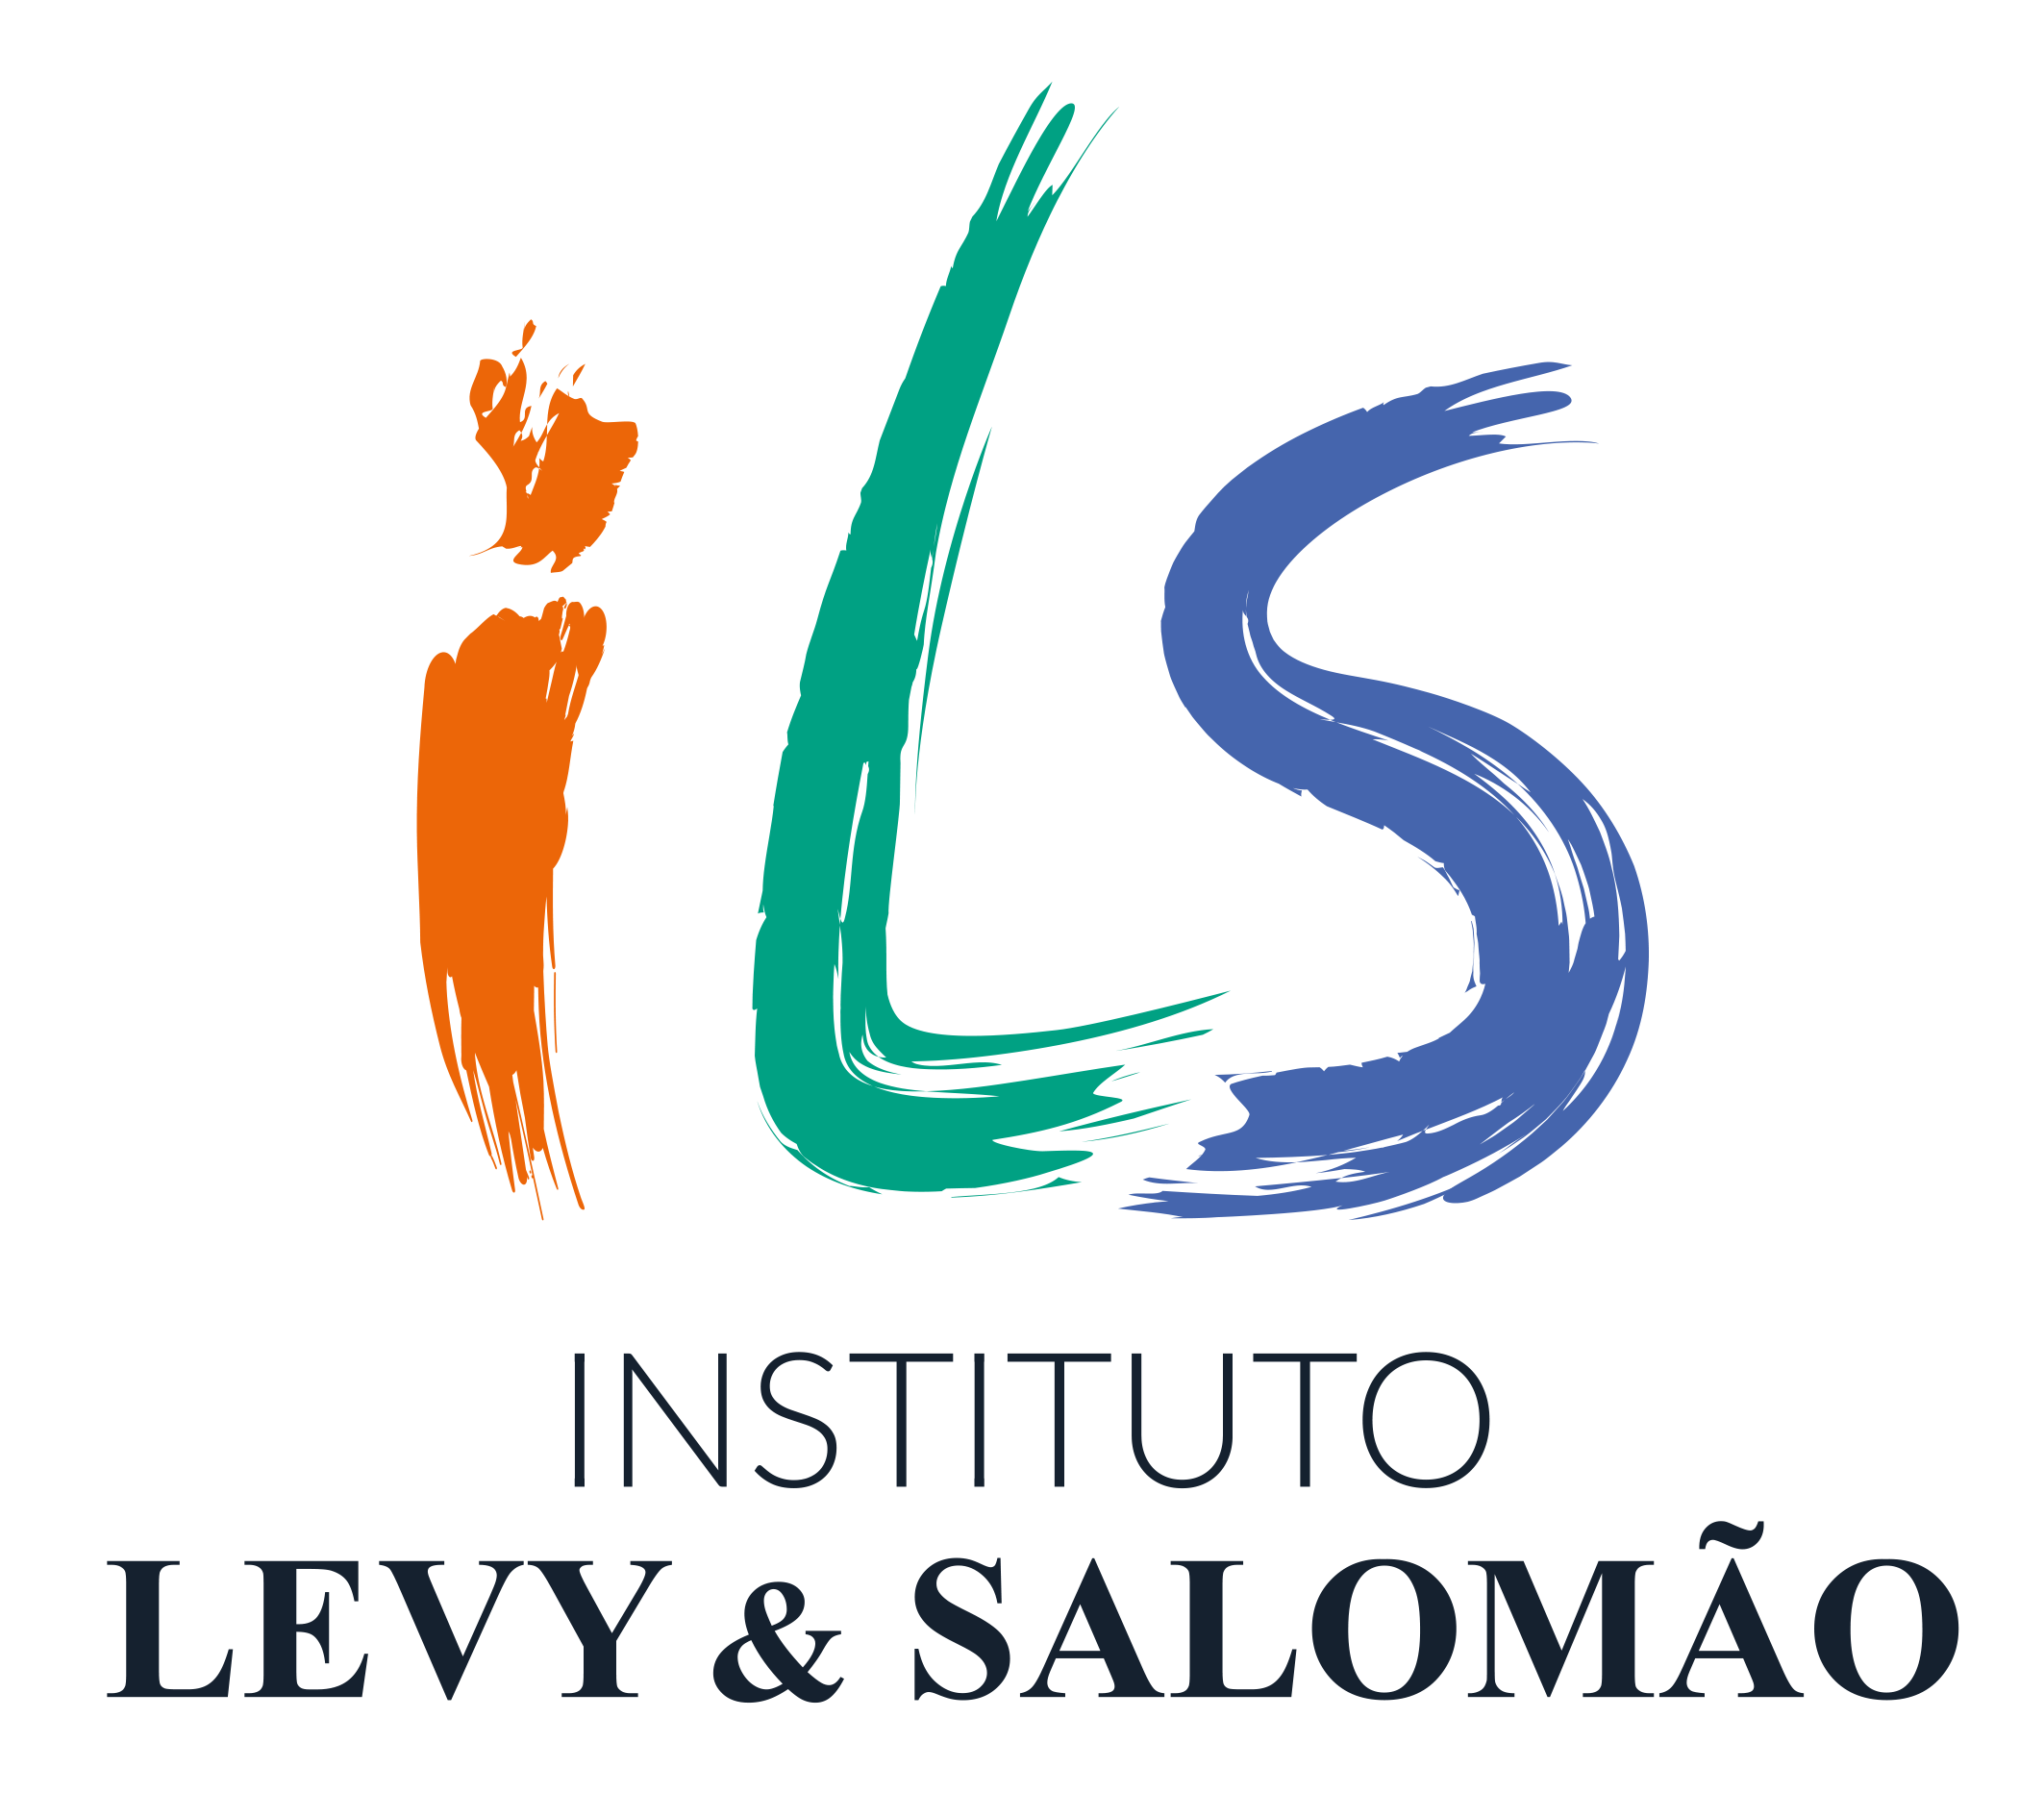 Instituto Levy © Salomão